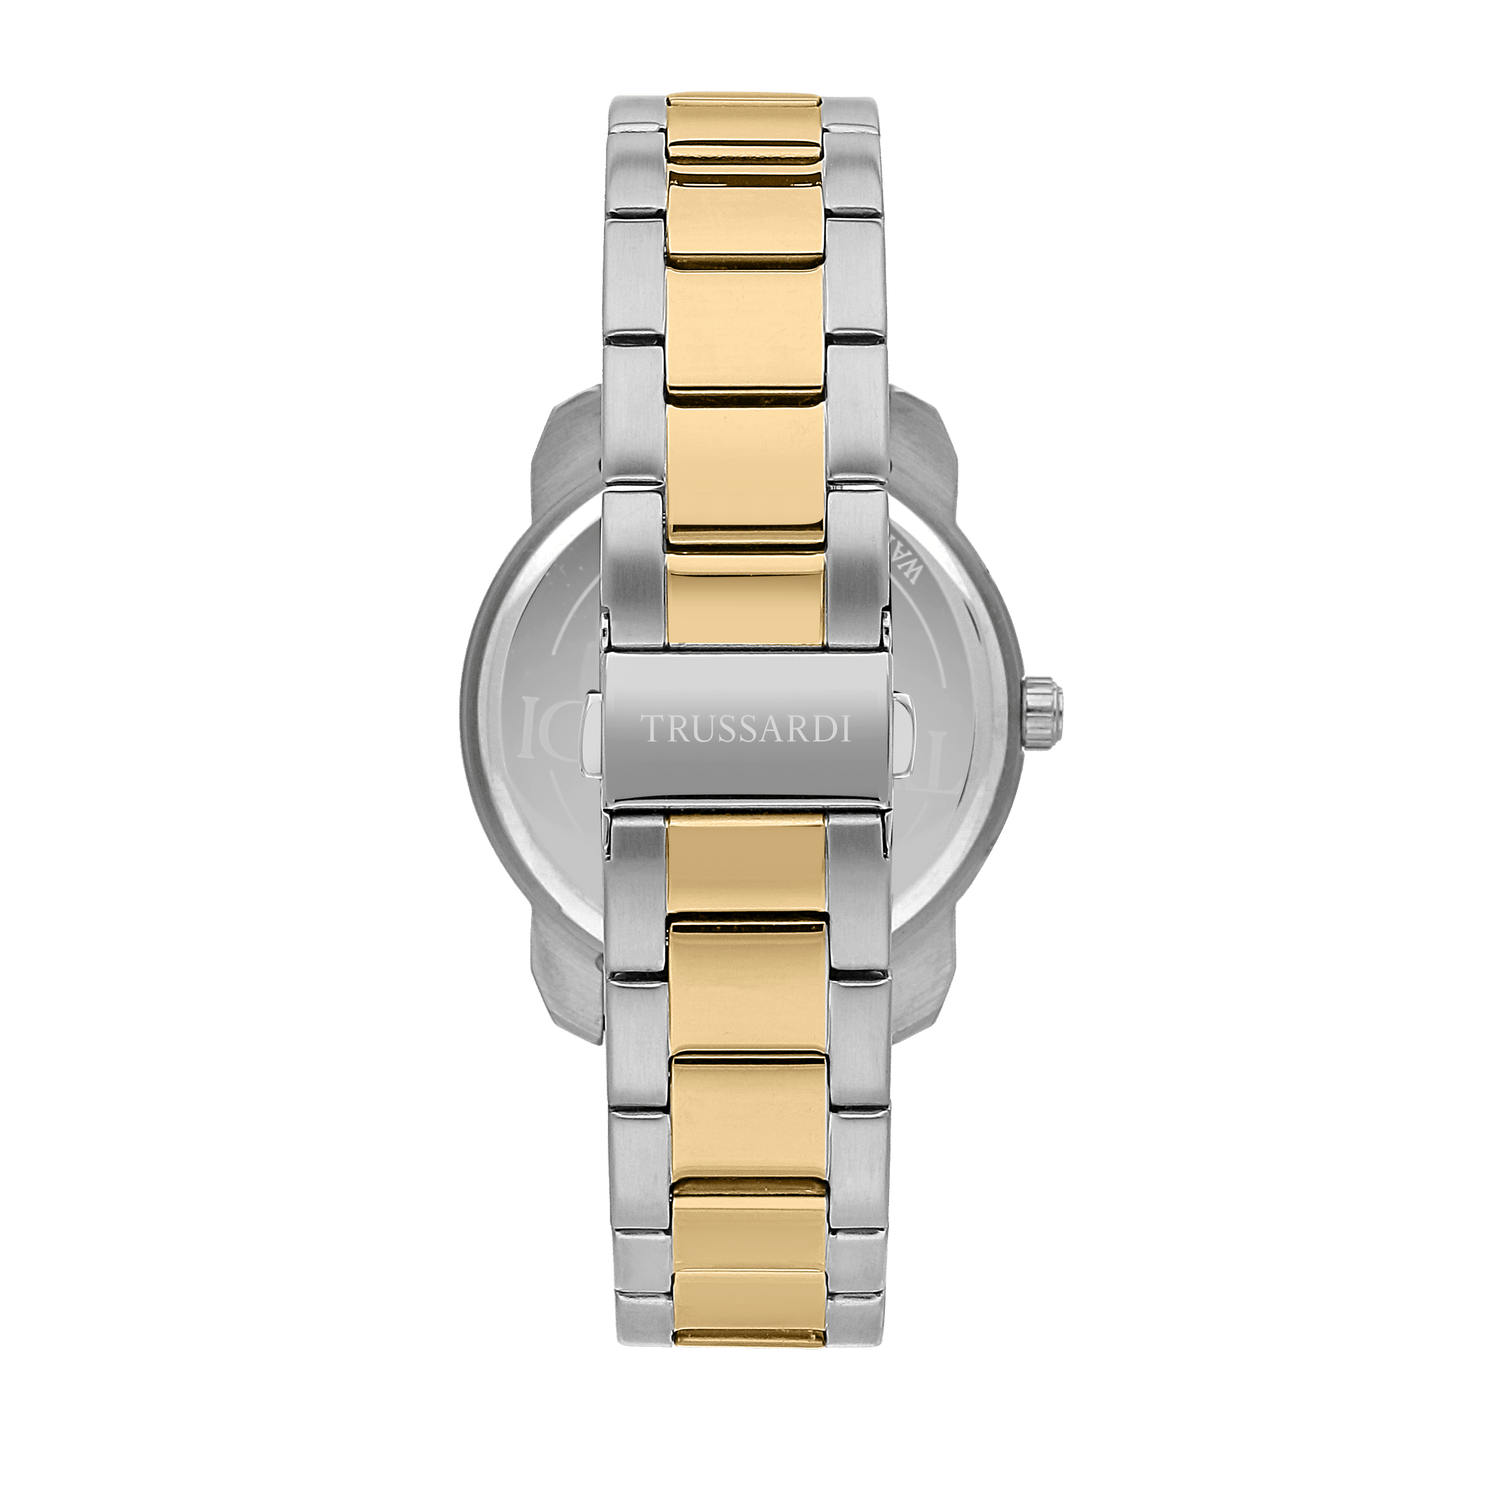 Trussardi C-City Automatic Watch for Men